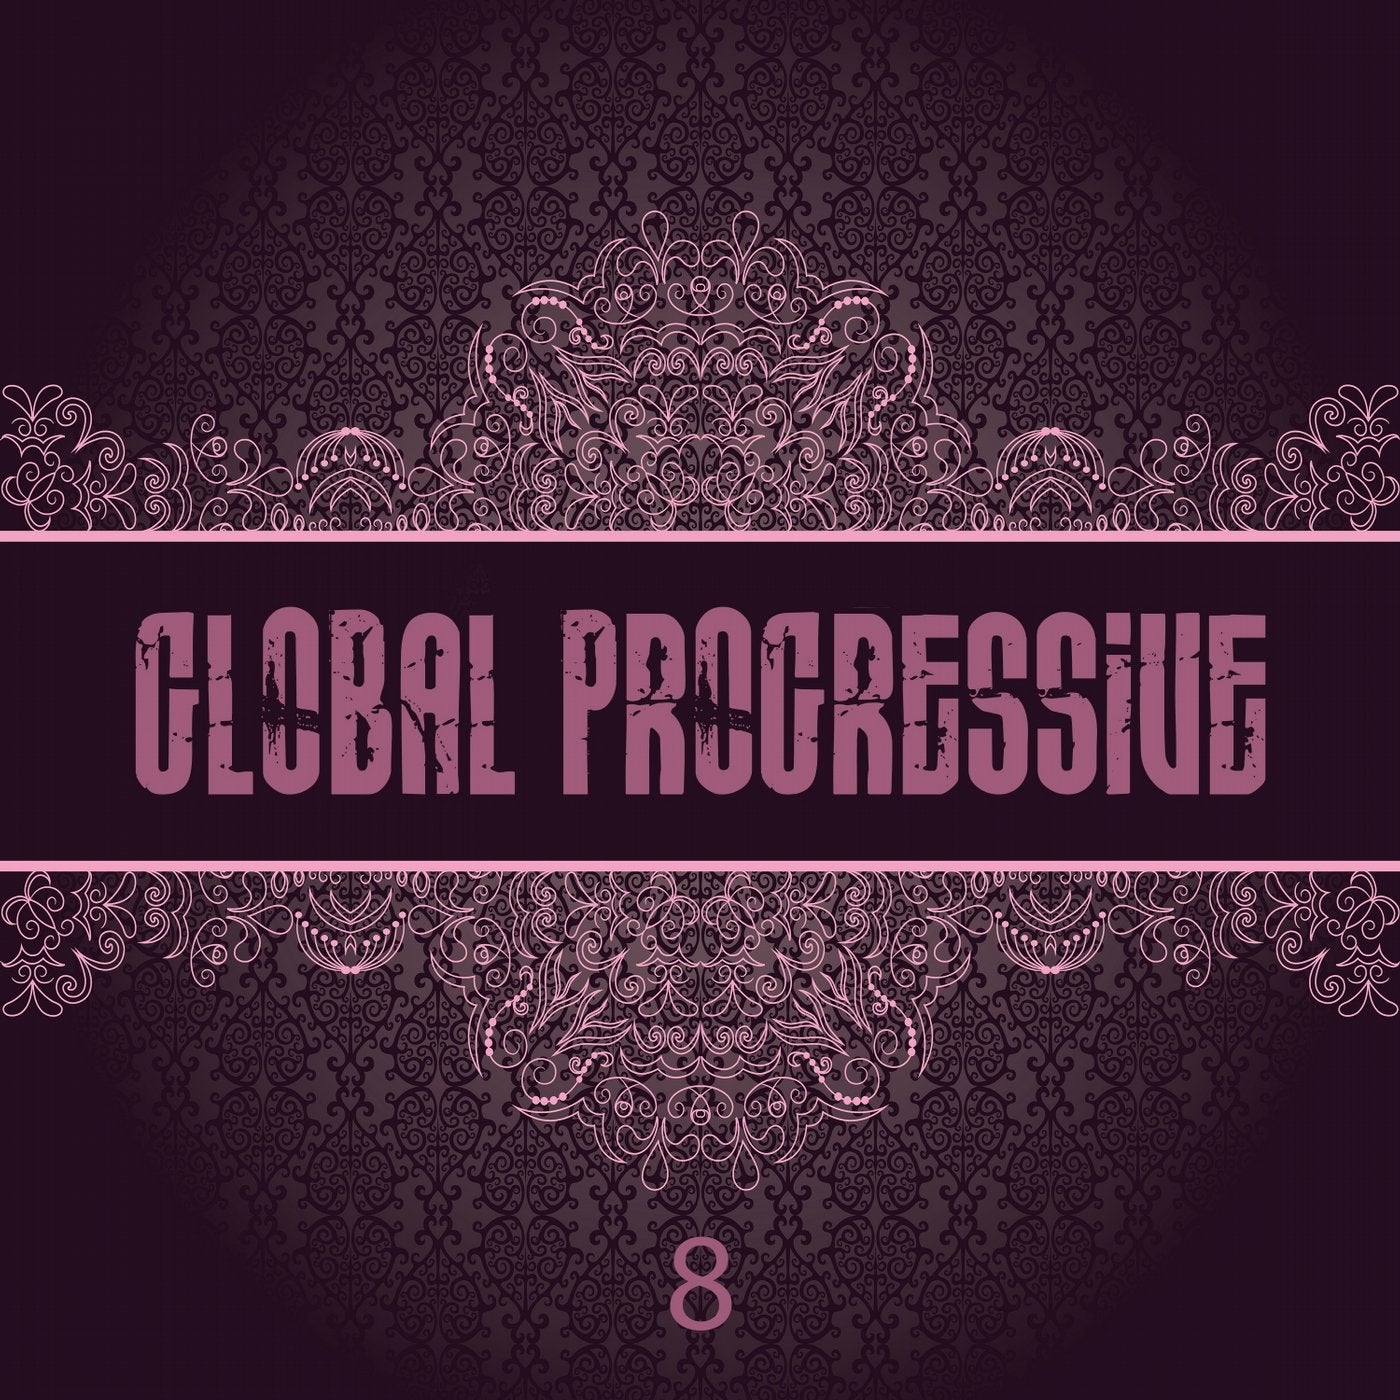 Global Progressive, Vol. 8